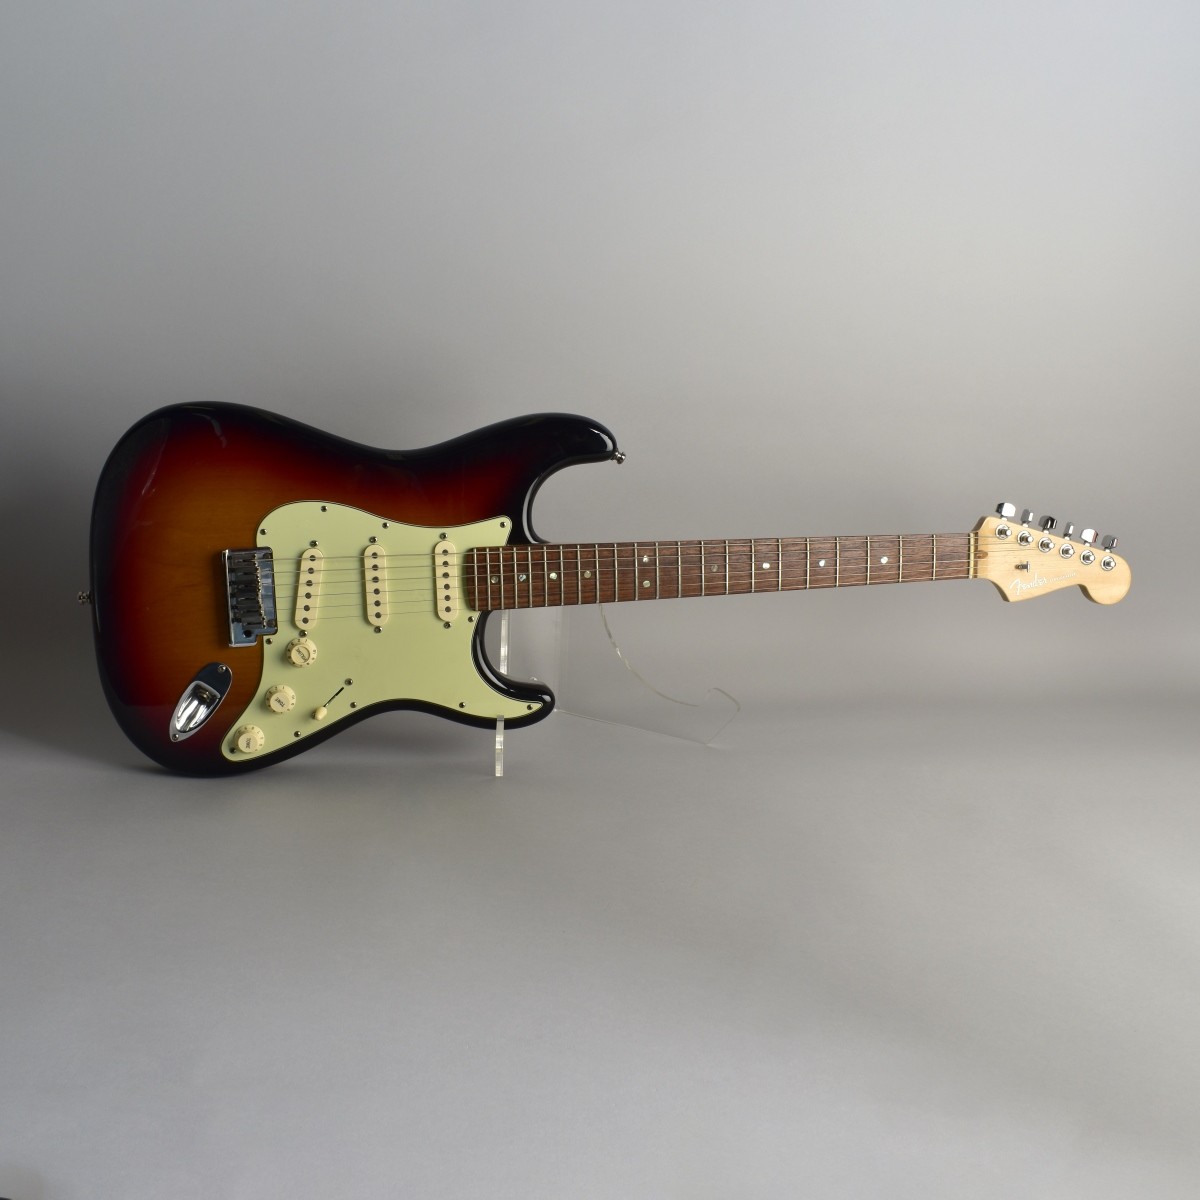 Fender American Deluxe Stratocaster Guitar w/ Case